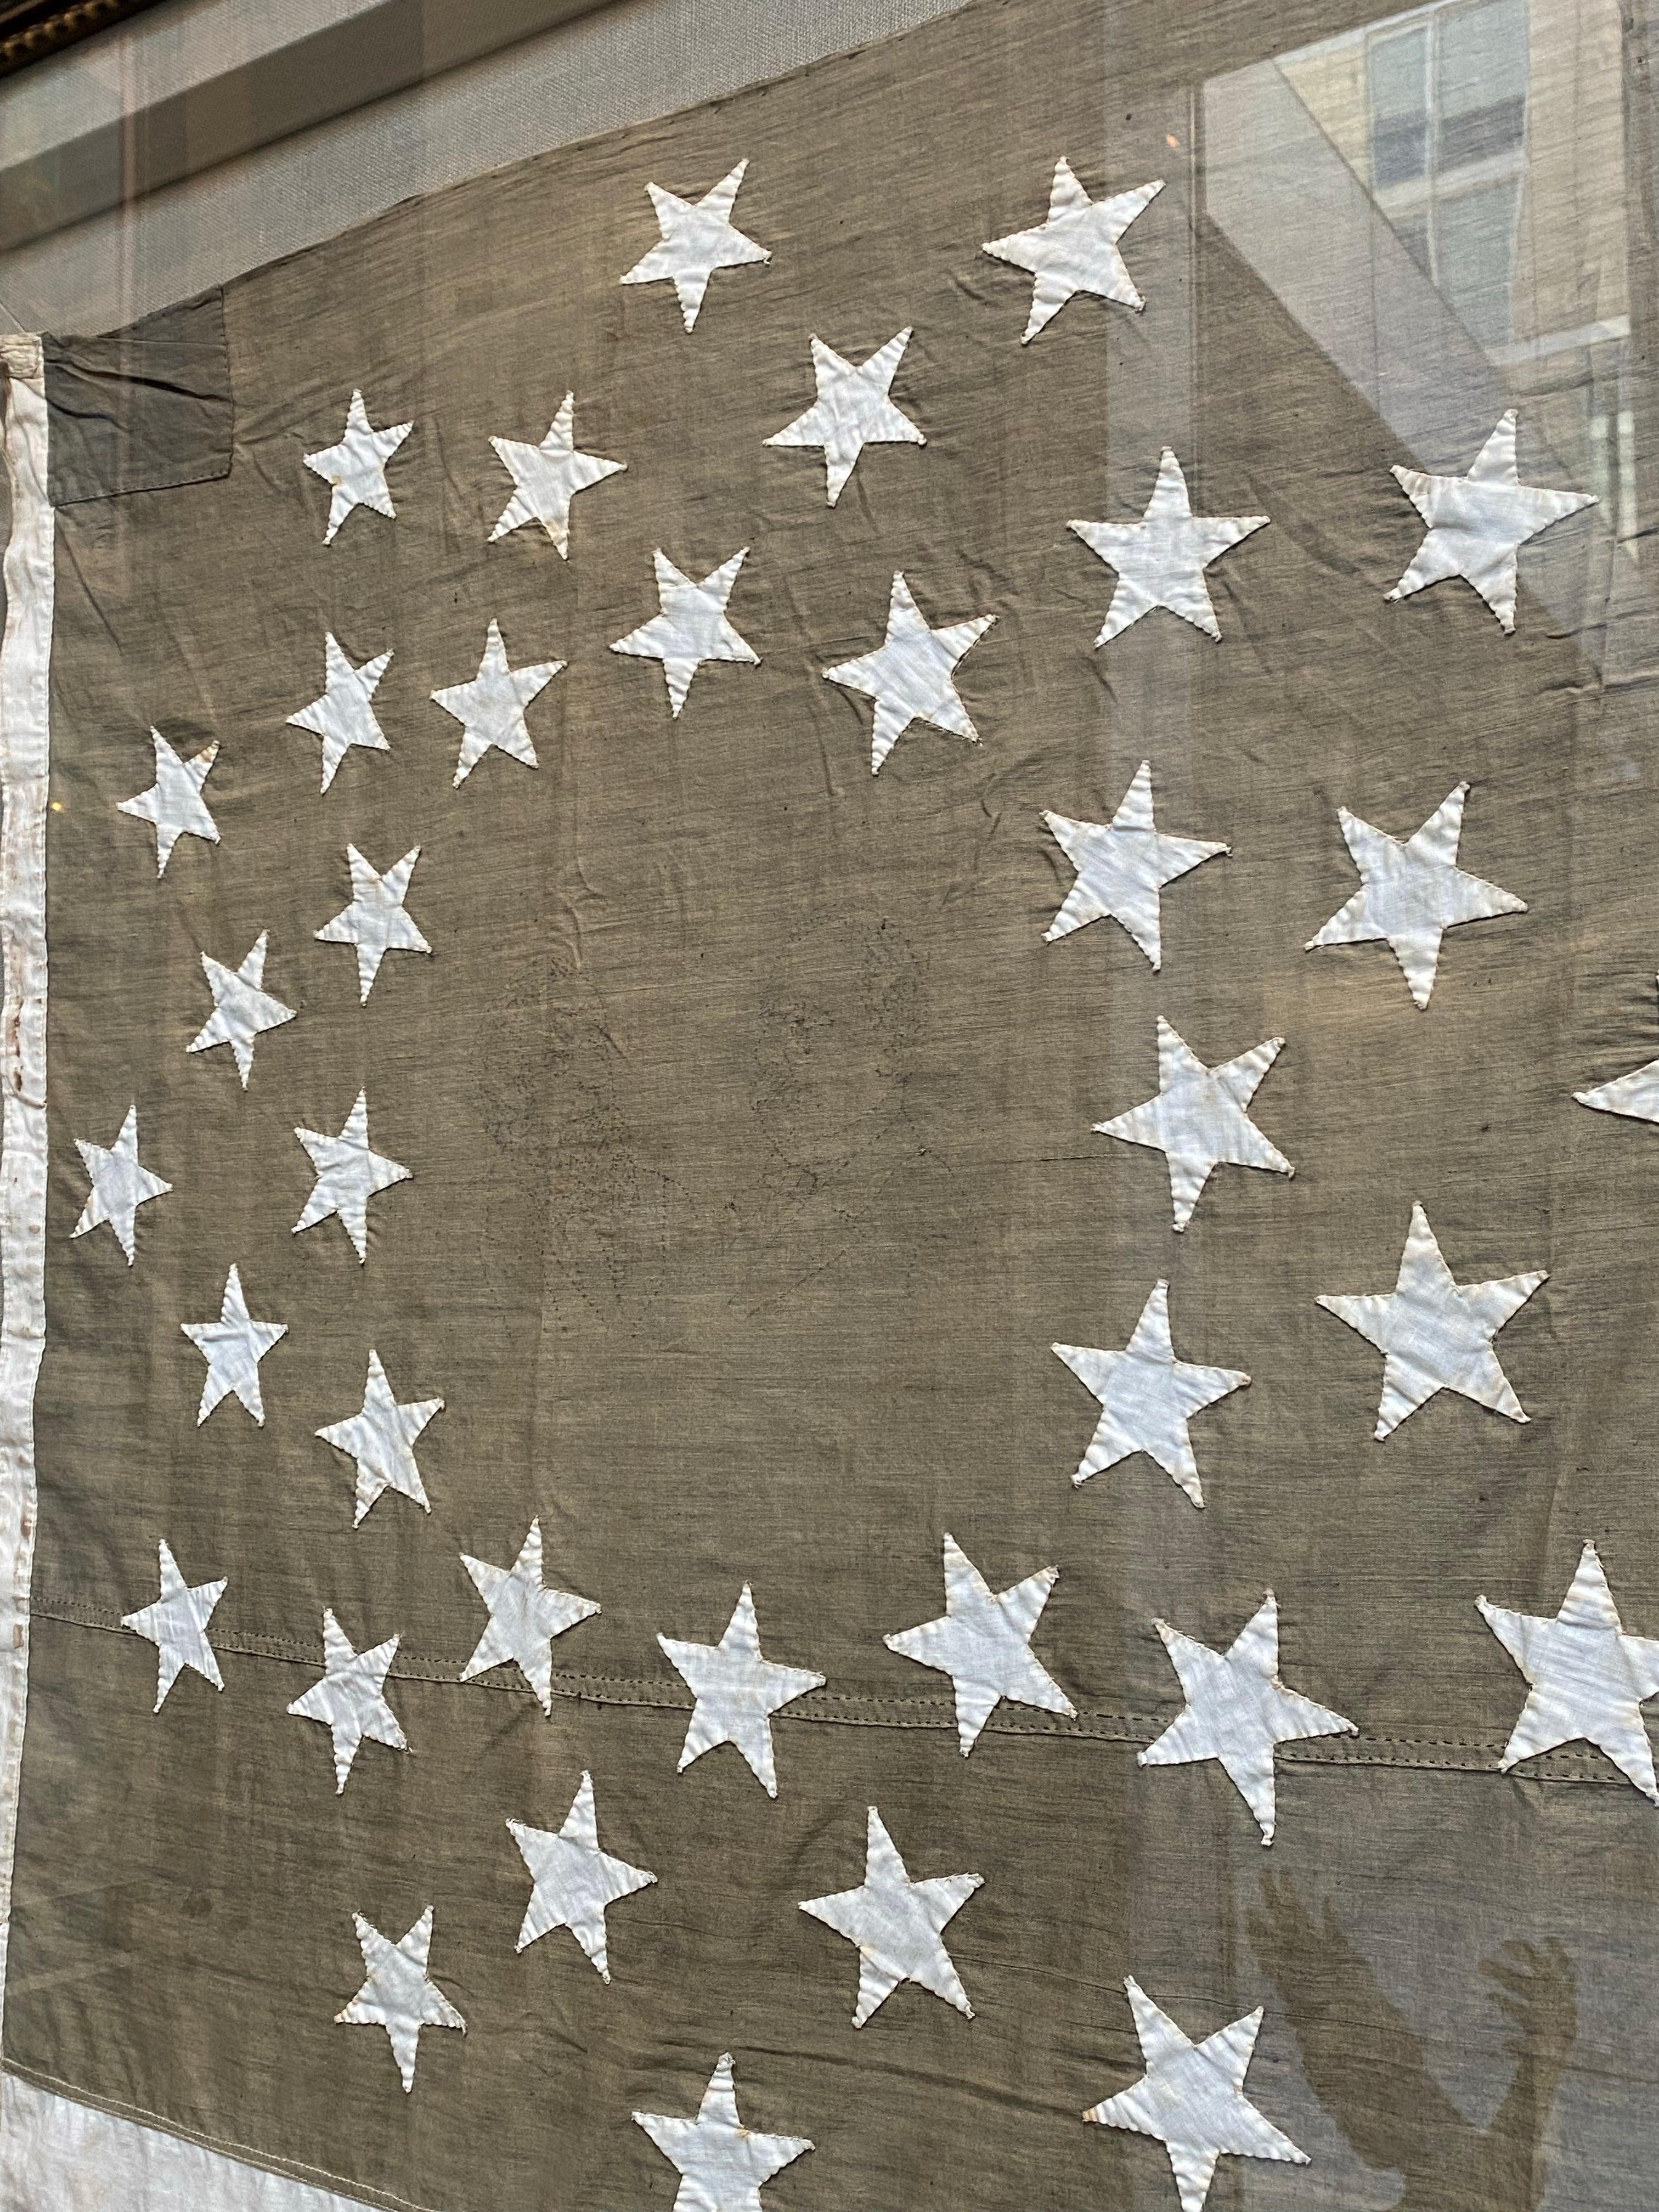 Cotton 36-Star American Flag, Hand-Cut and Sewn, Civil War Era with Rare Pattern